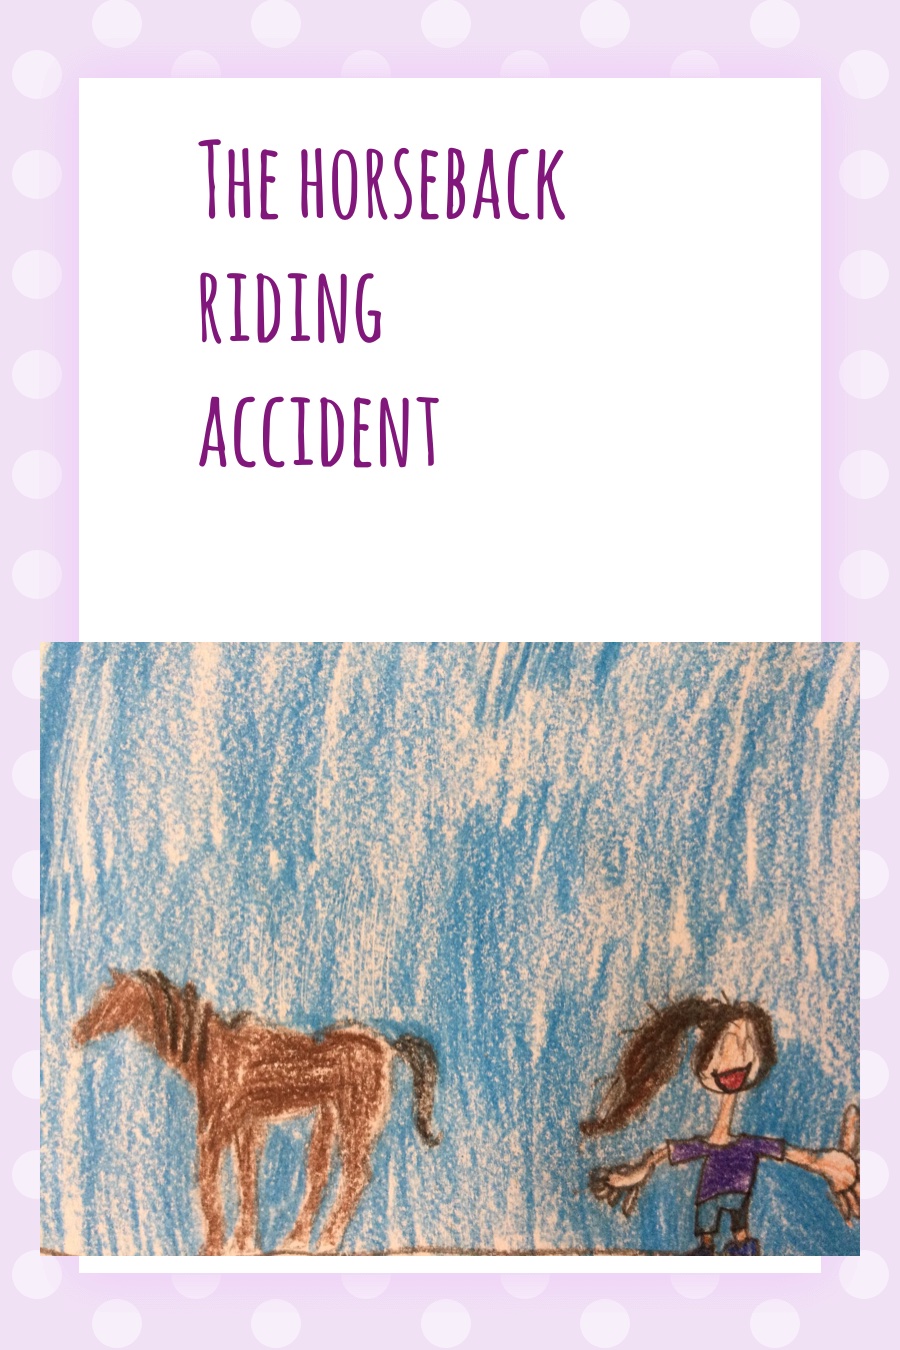 The Horseback Riding Accident by Nika I